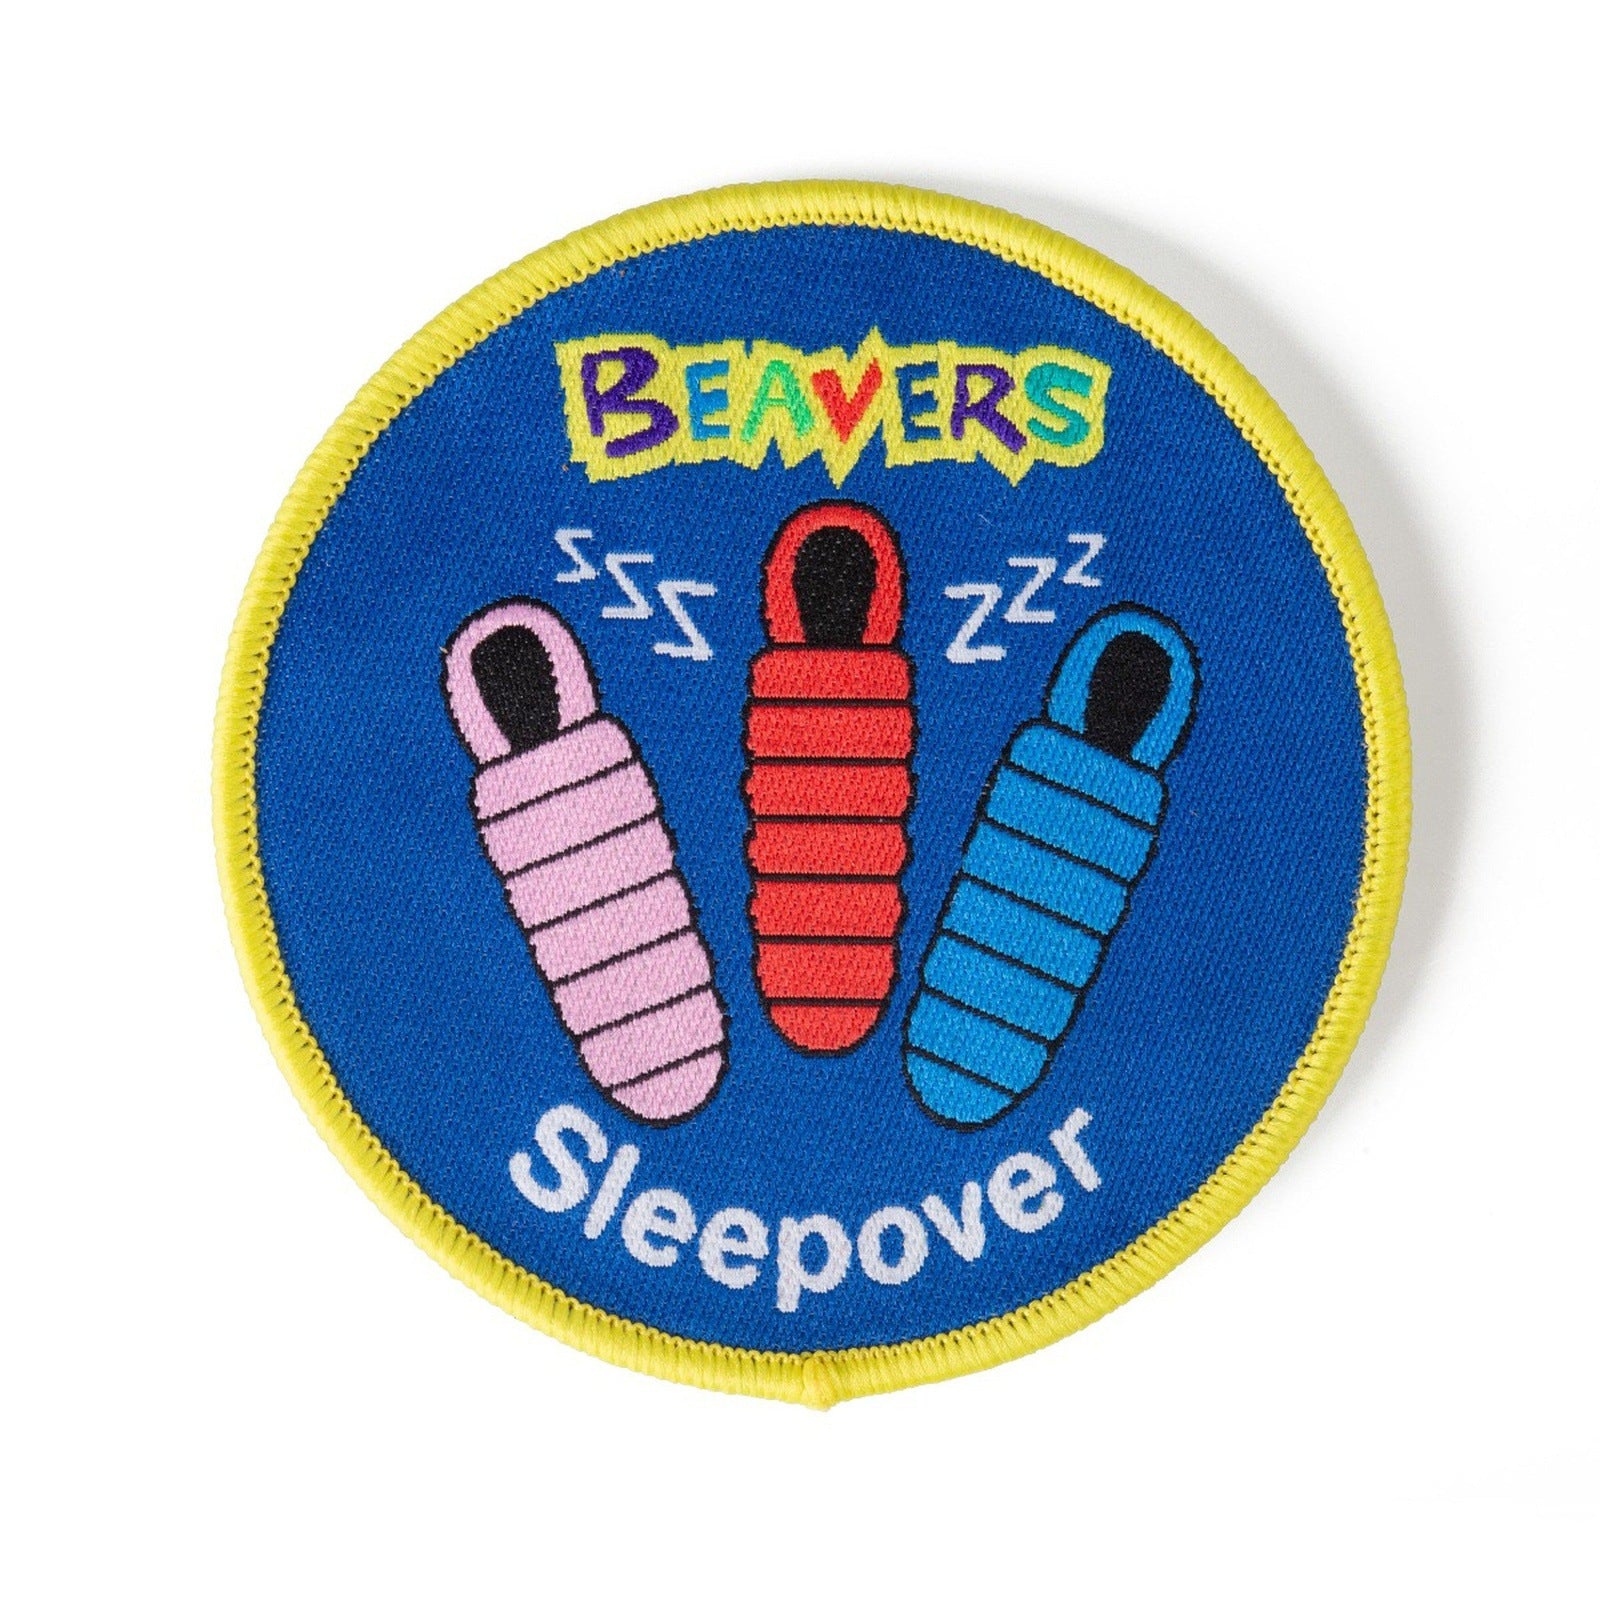 Beaver Scouts Sleepover Fun Badge